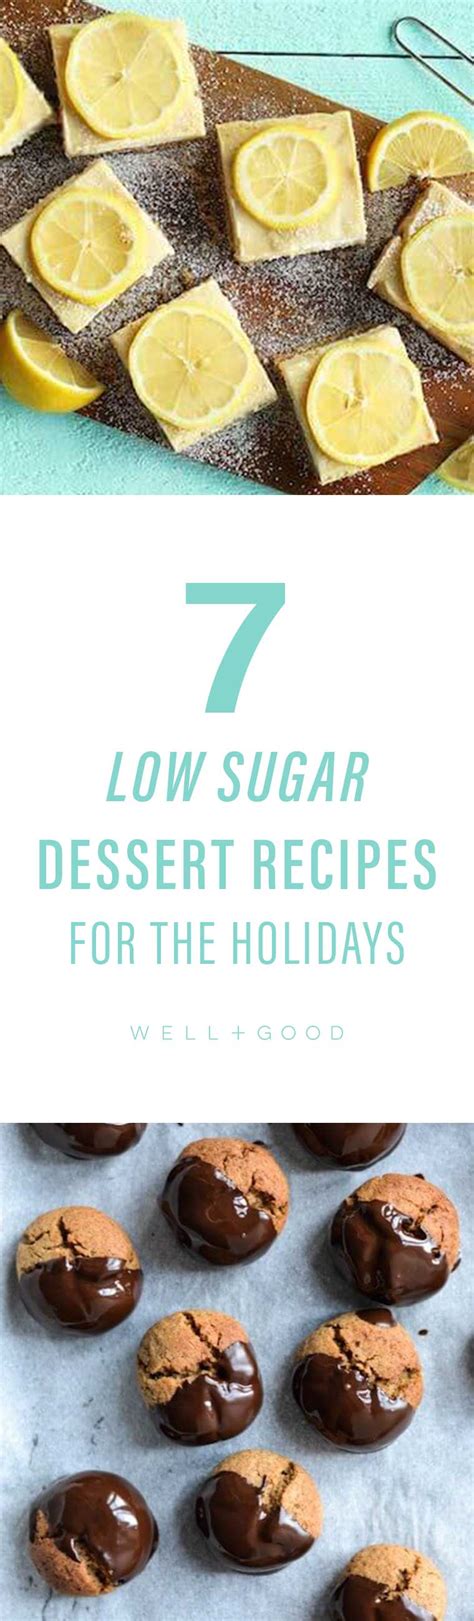 November 20, 2018 by jenny sugar. 7 low-sugar holiday desserts | Well+Good | Low sugar ...